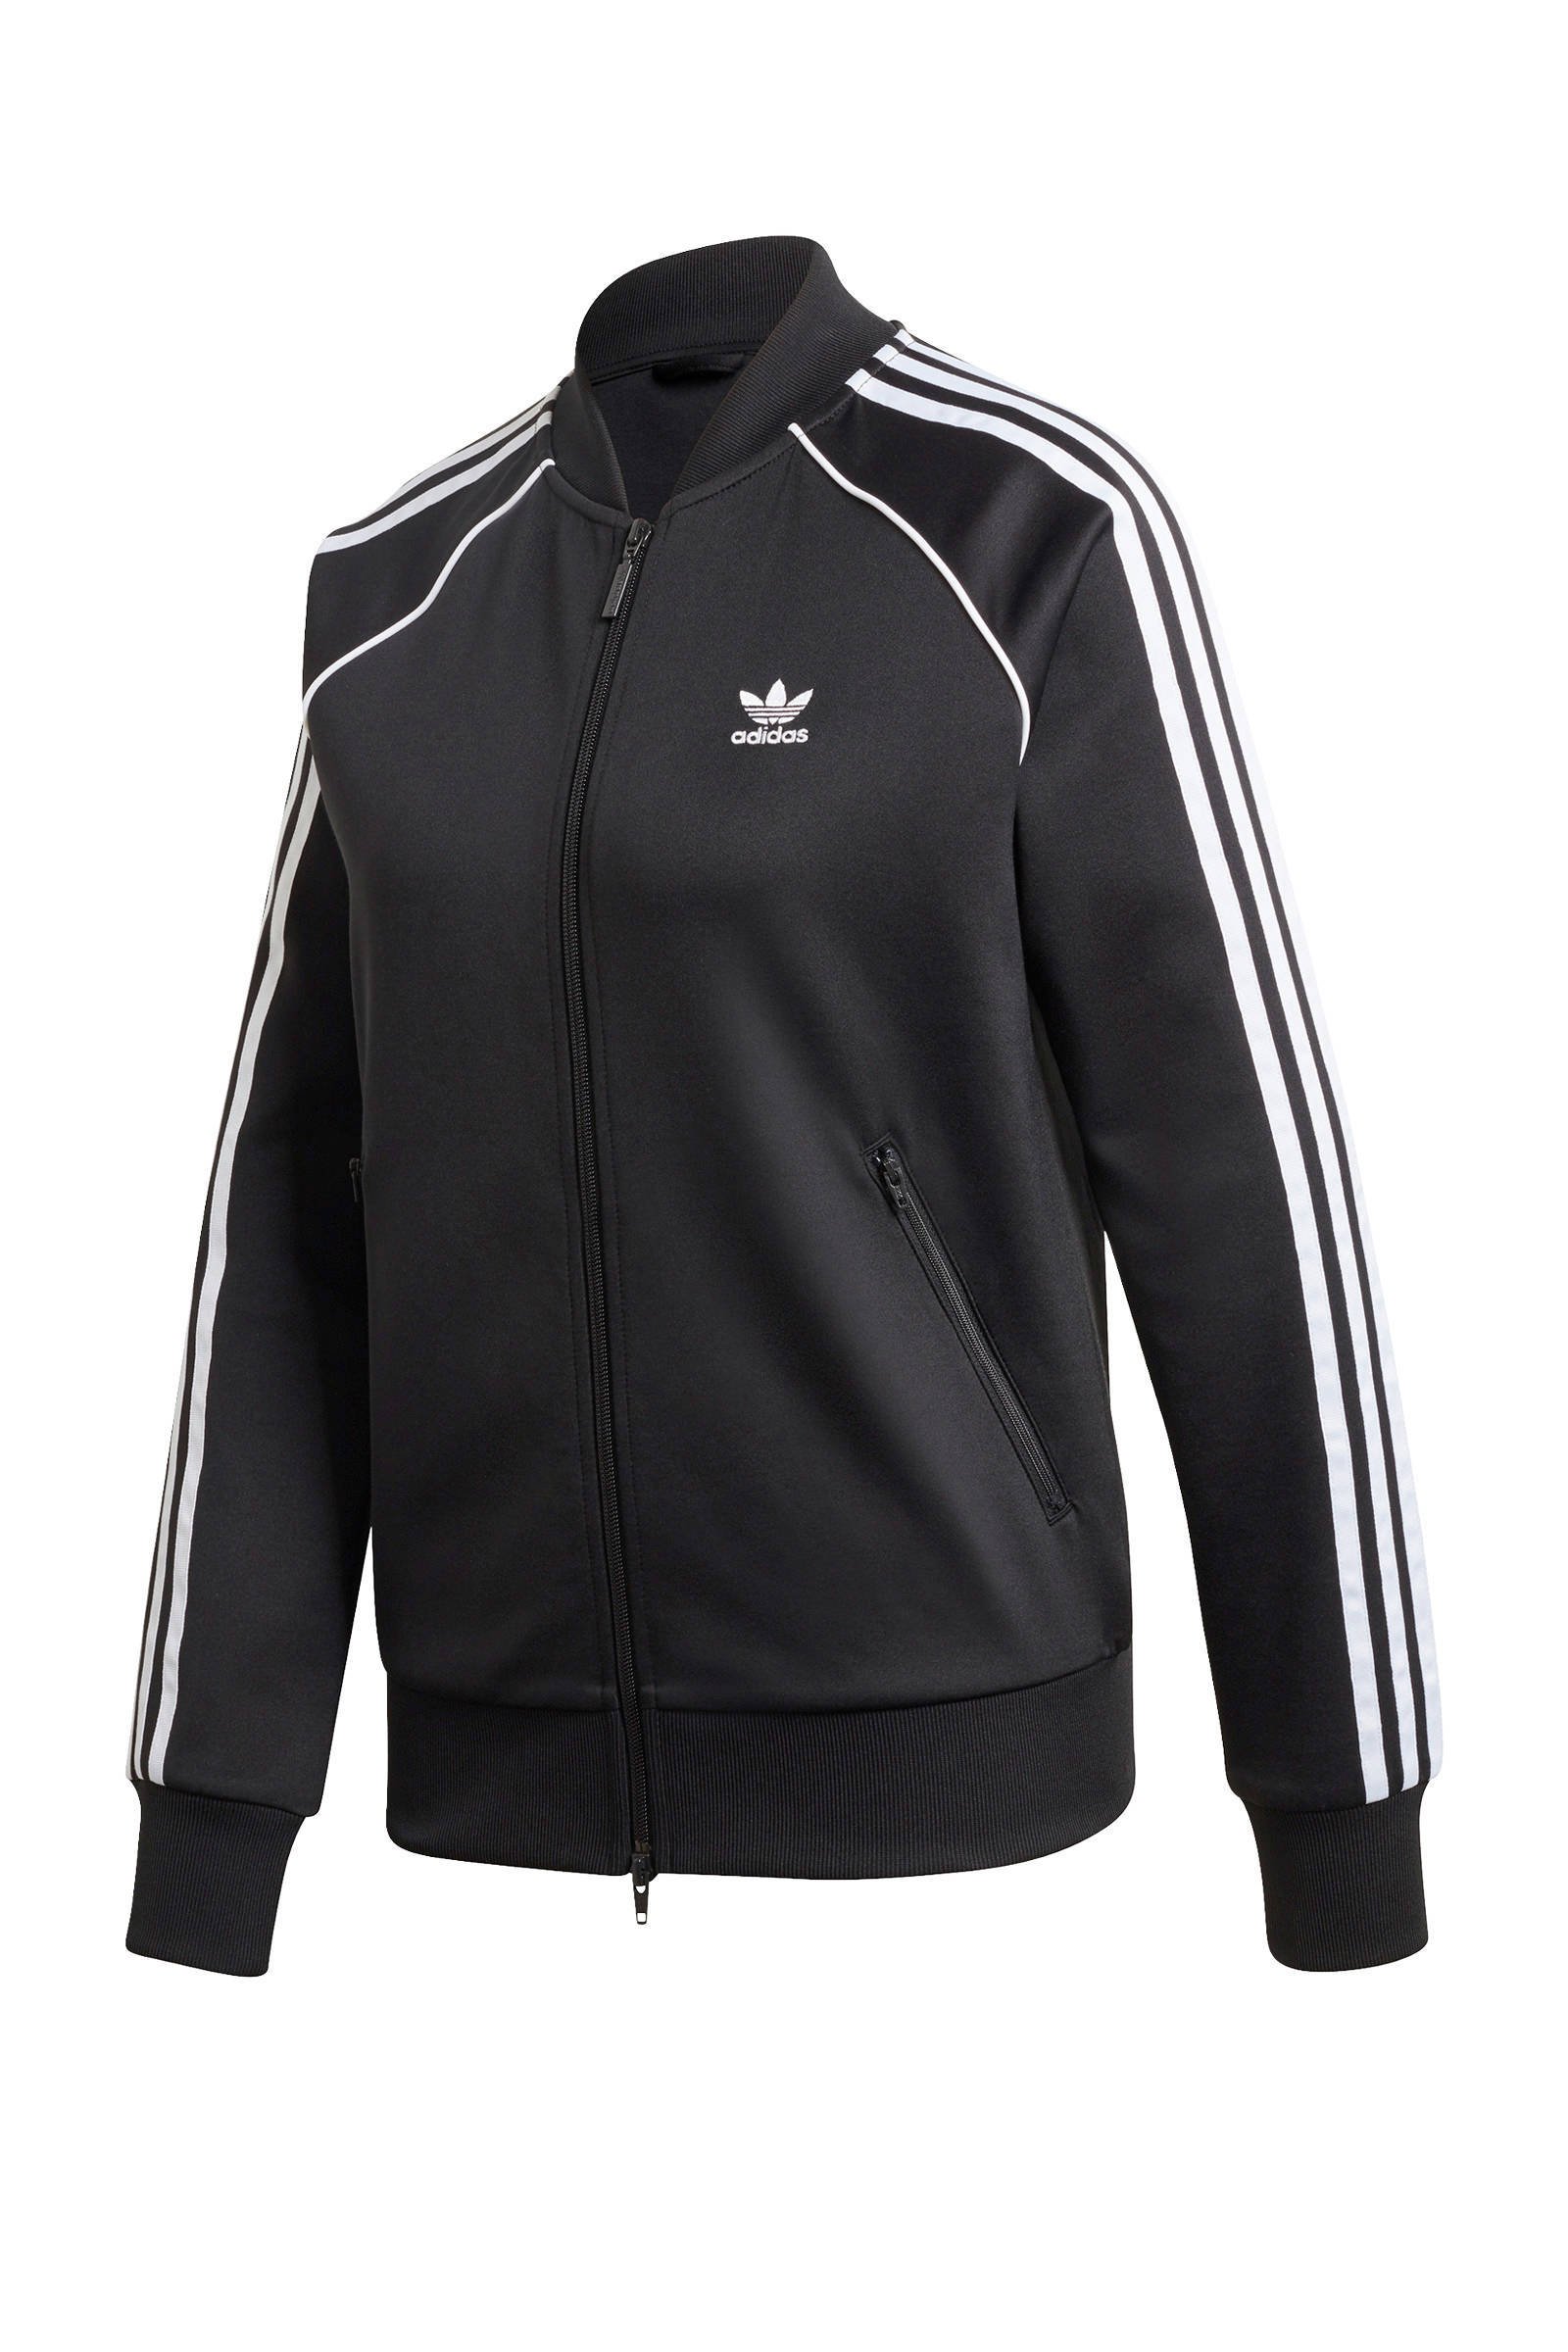 adidas Originals Superstar vest zwart | wehkamp